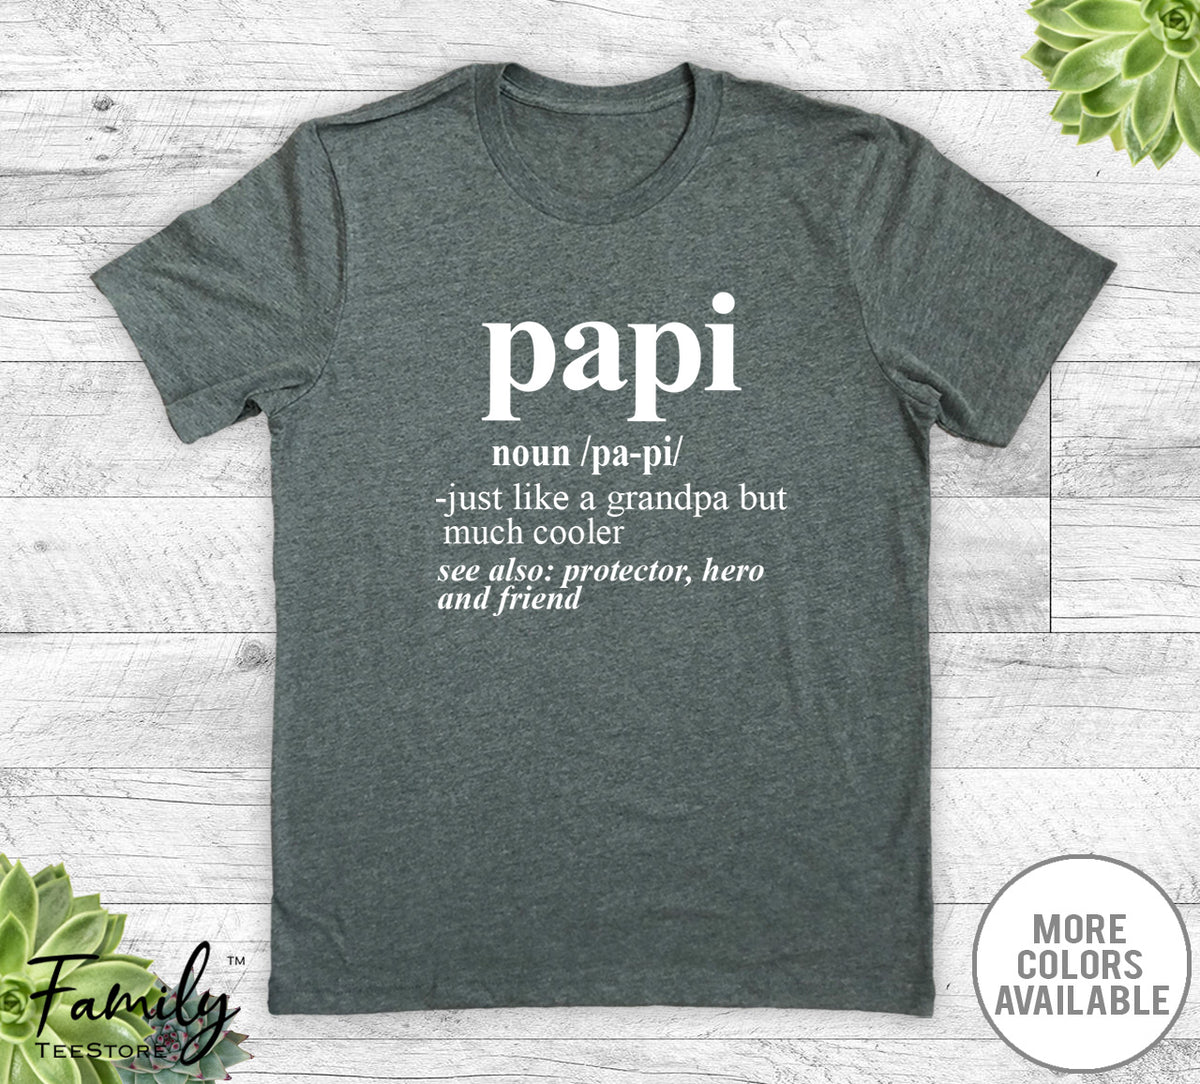 Papi Noun - Unisex T-shirt - Papi Shirt - Papi Gift - familyteeprints